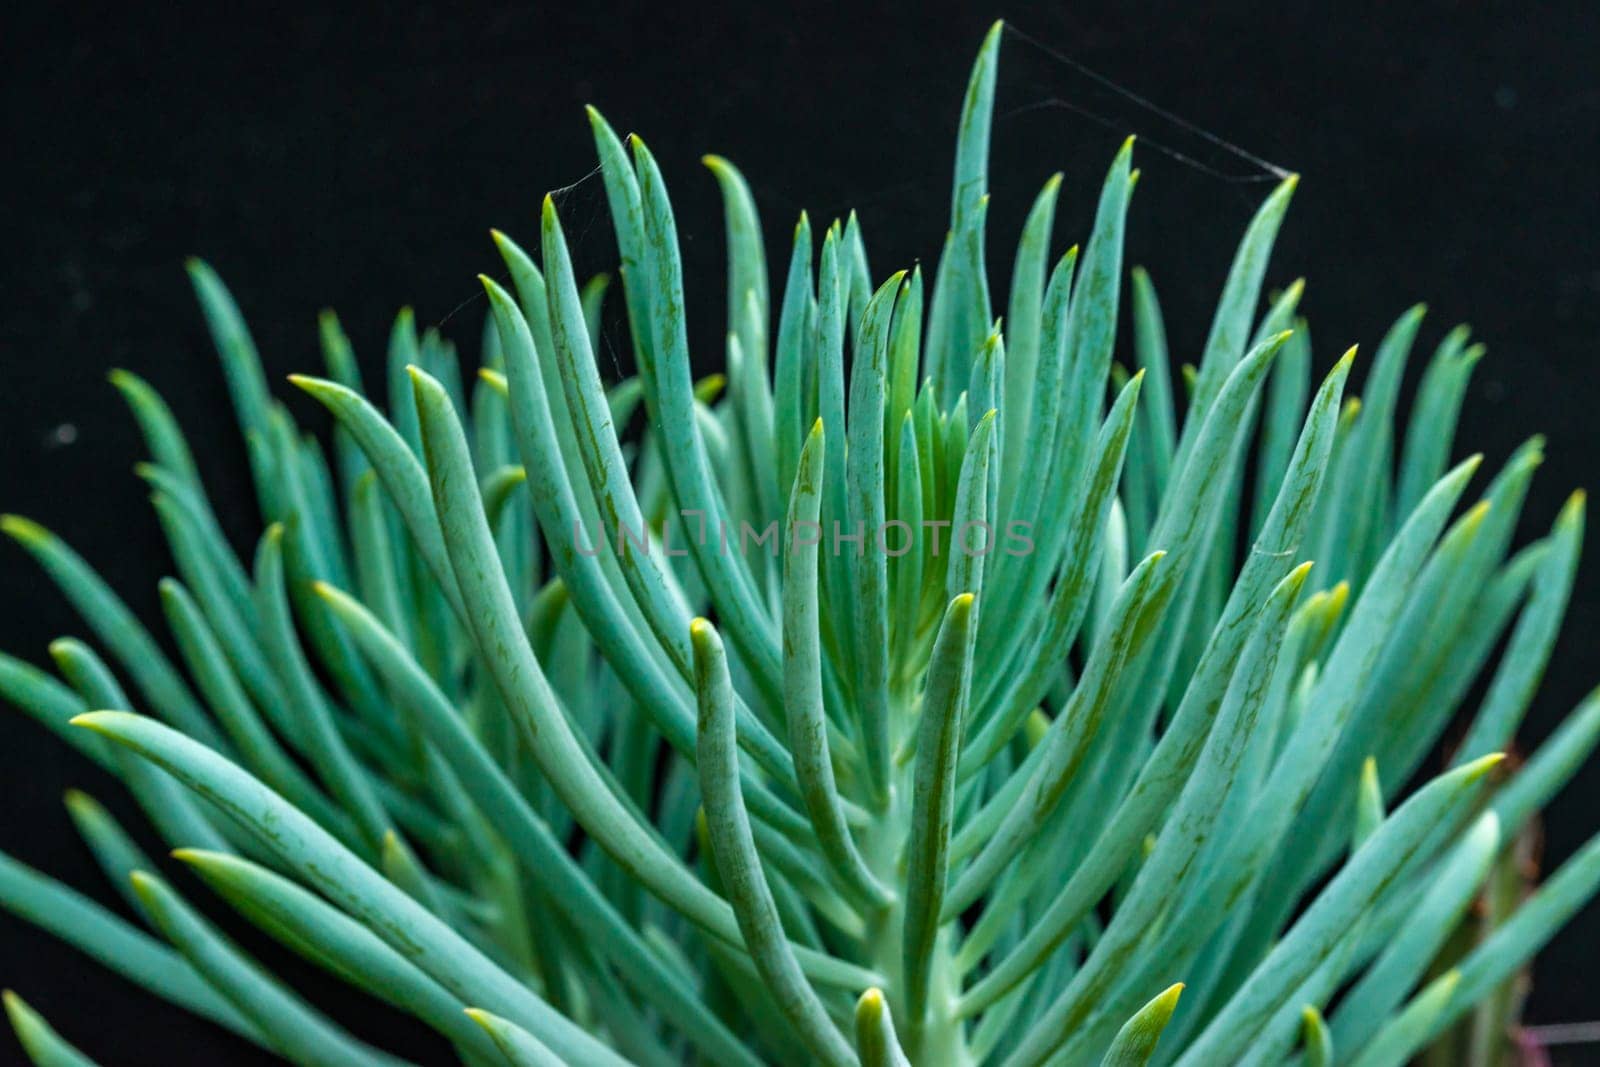 Senecio vitalis - succulent plant with thick succulent leaves by Hydrobiolog